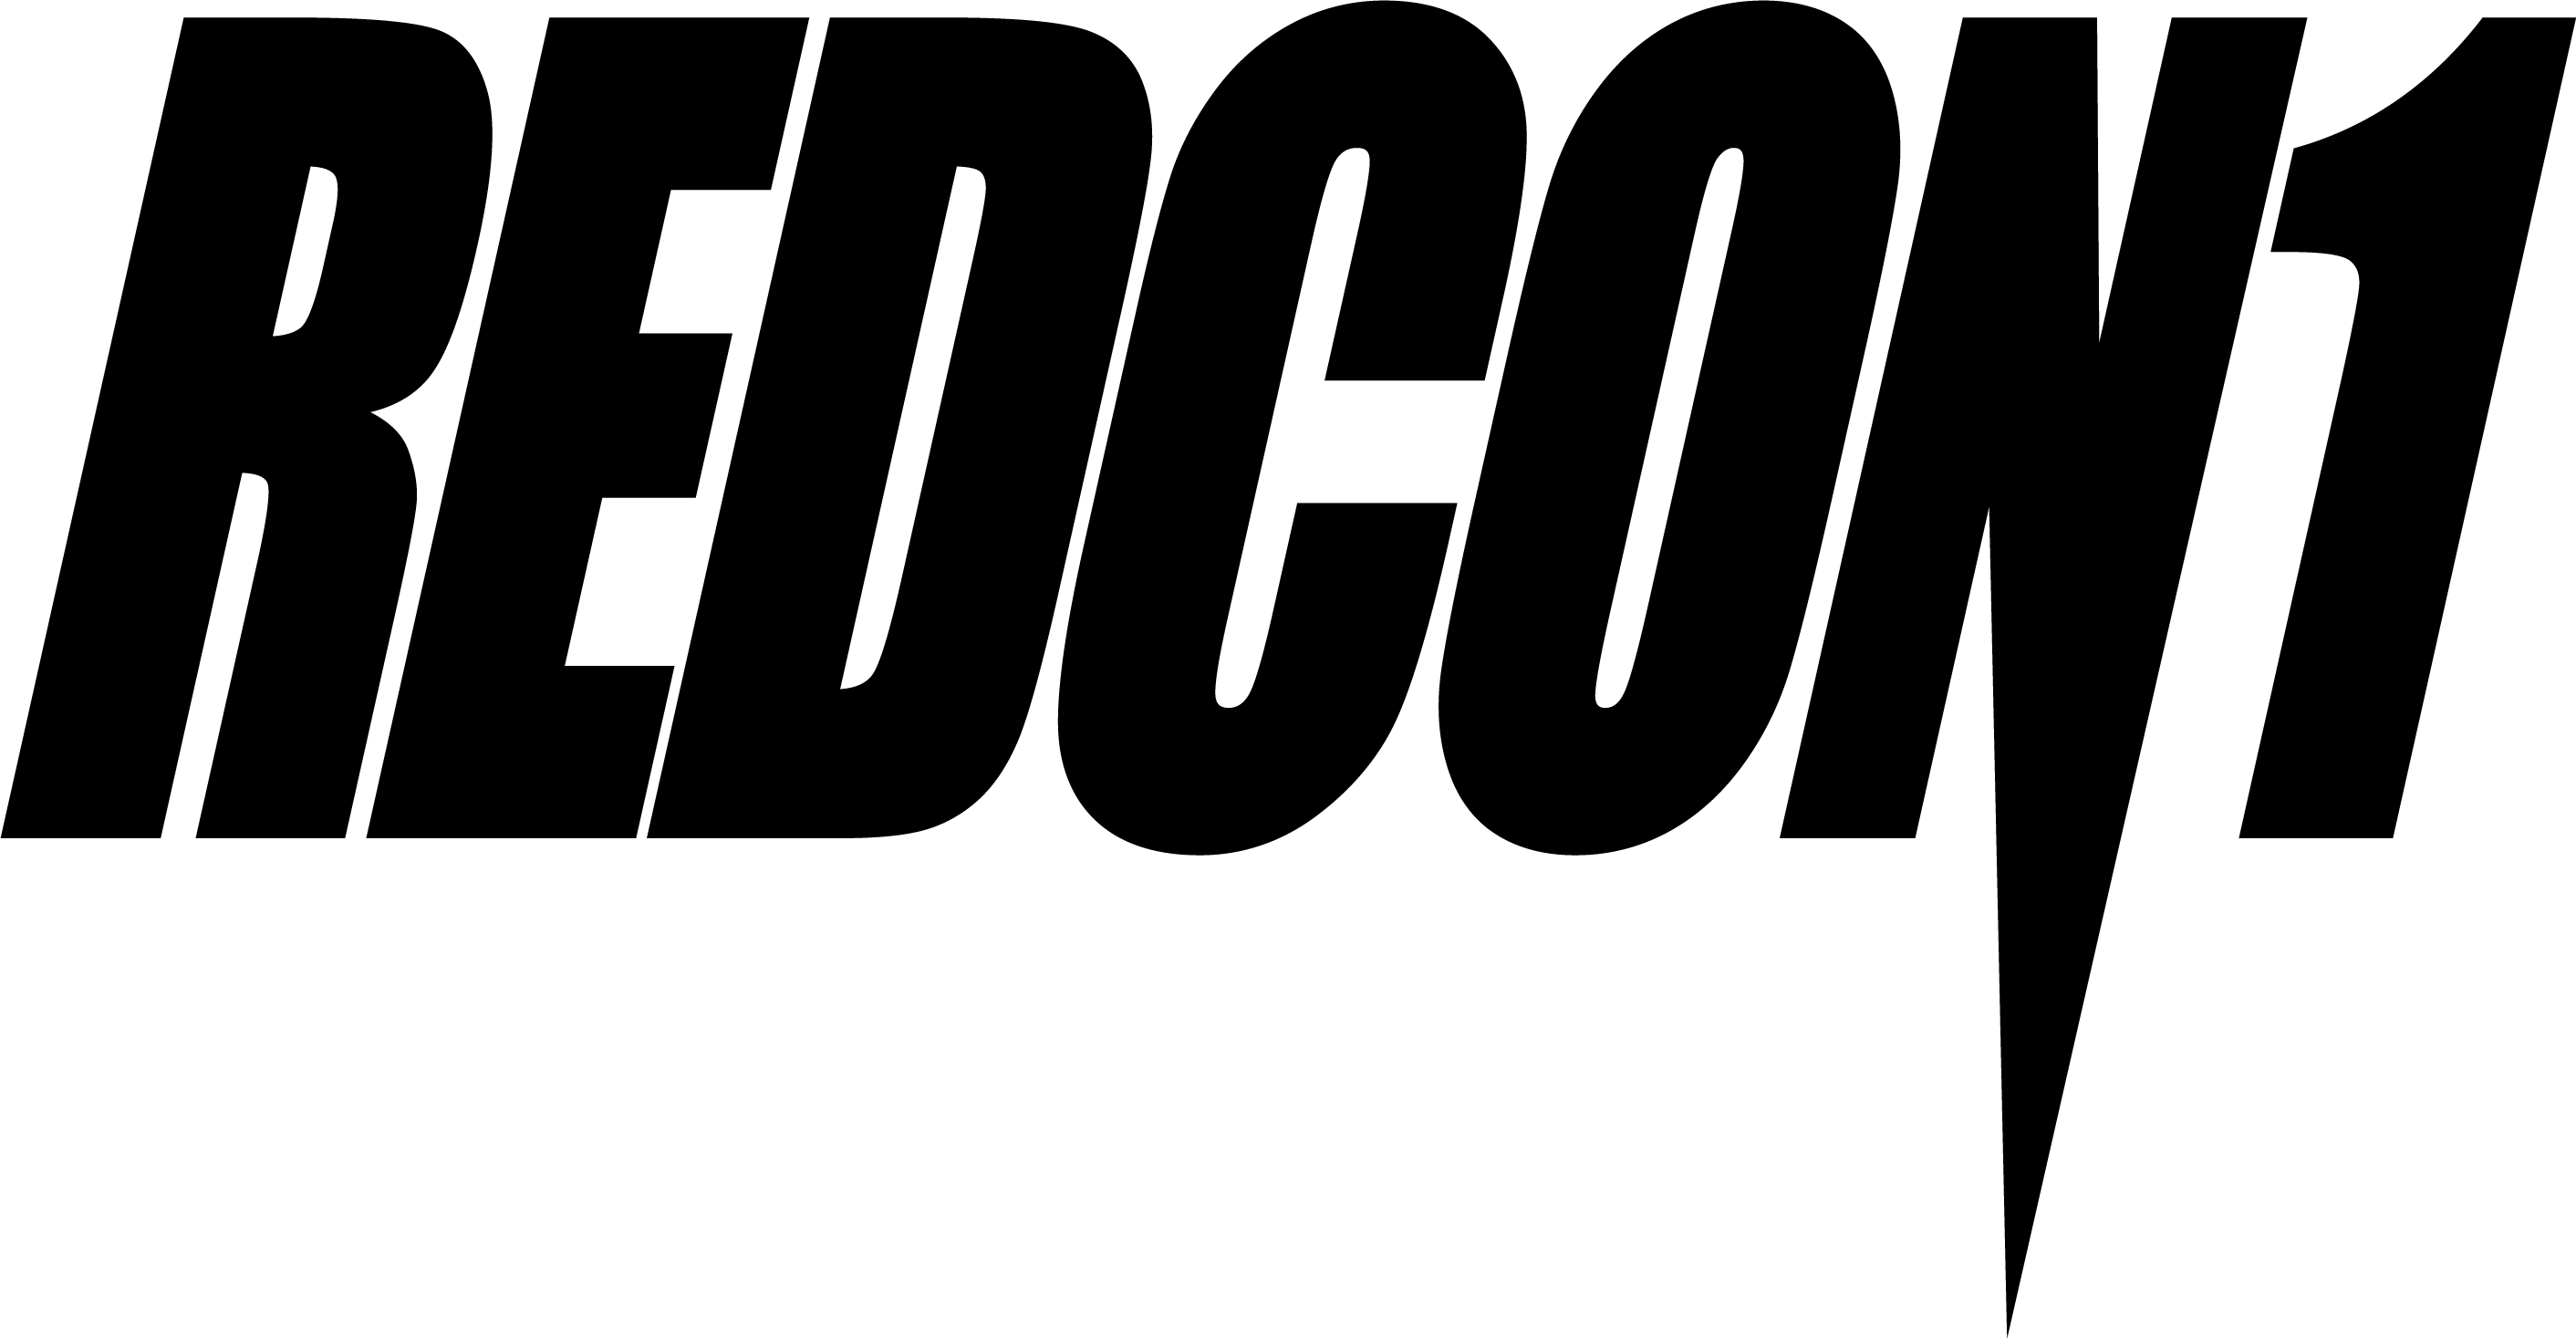 redcon1 logo